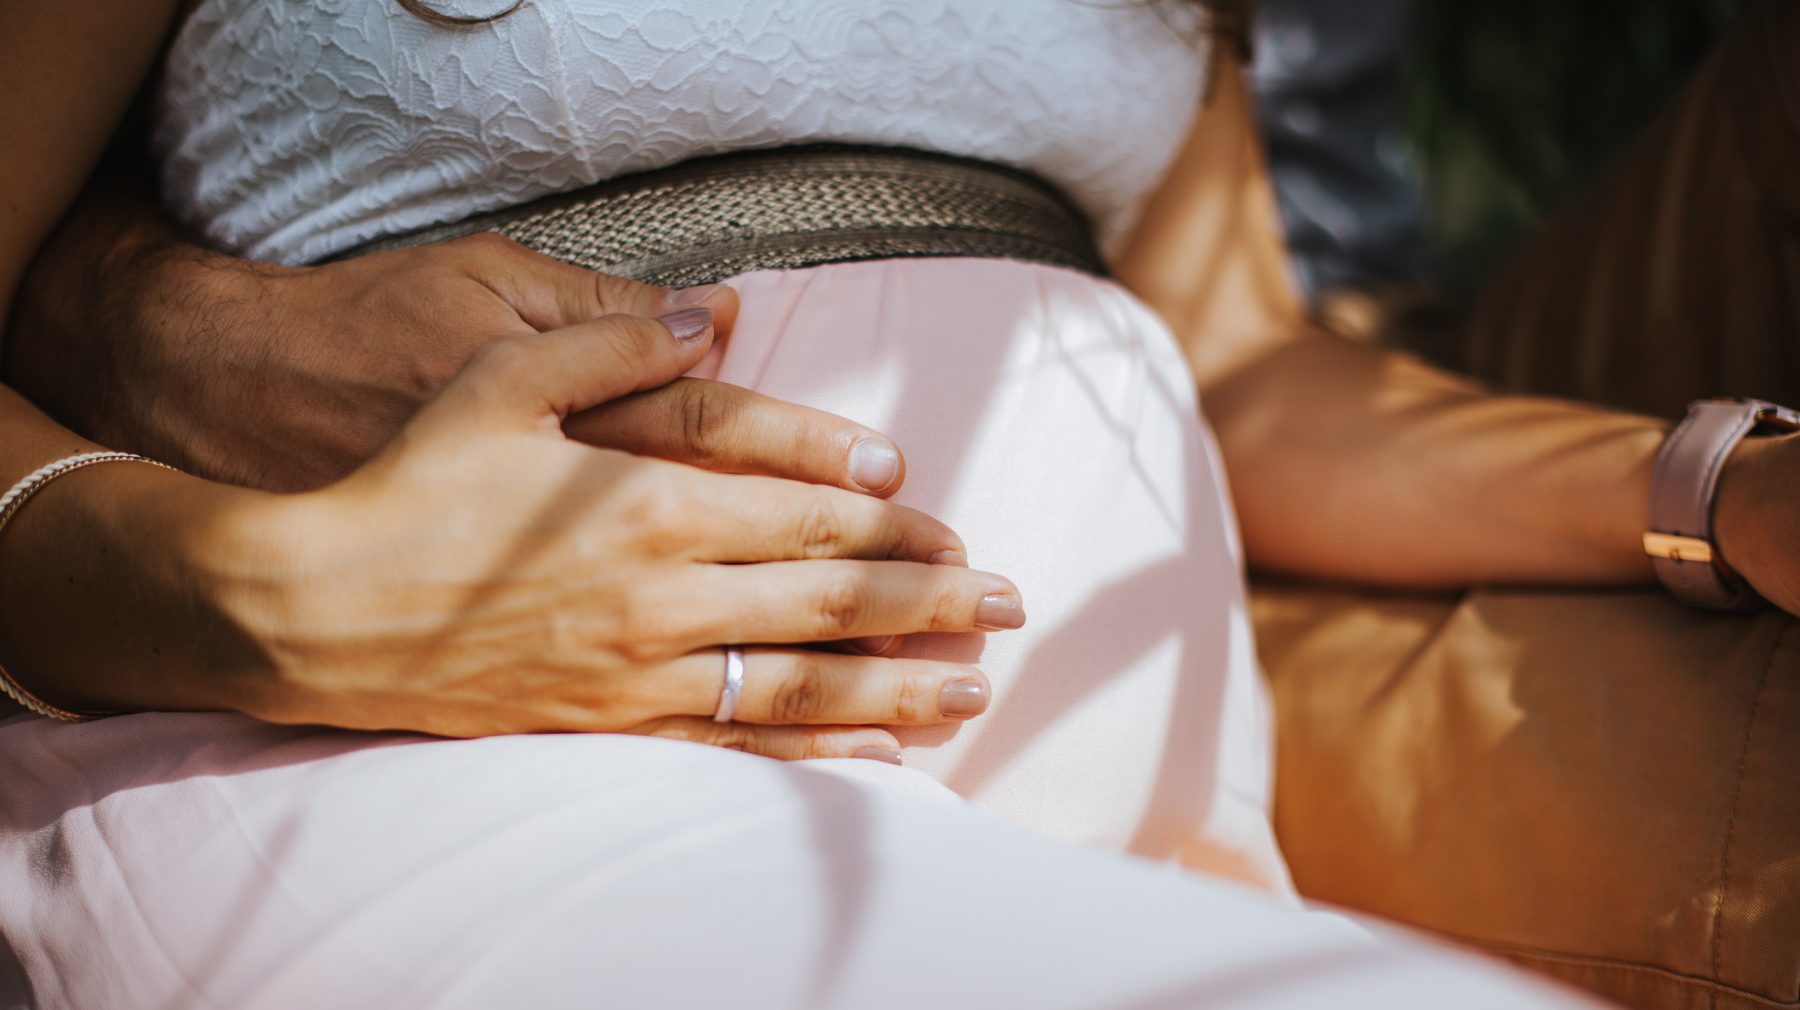 Zwanger raken na sterilisatie, hoe kan dat? Gynaecoloog legt uit